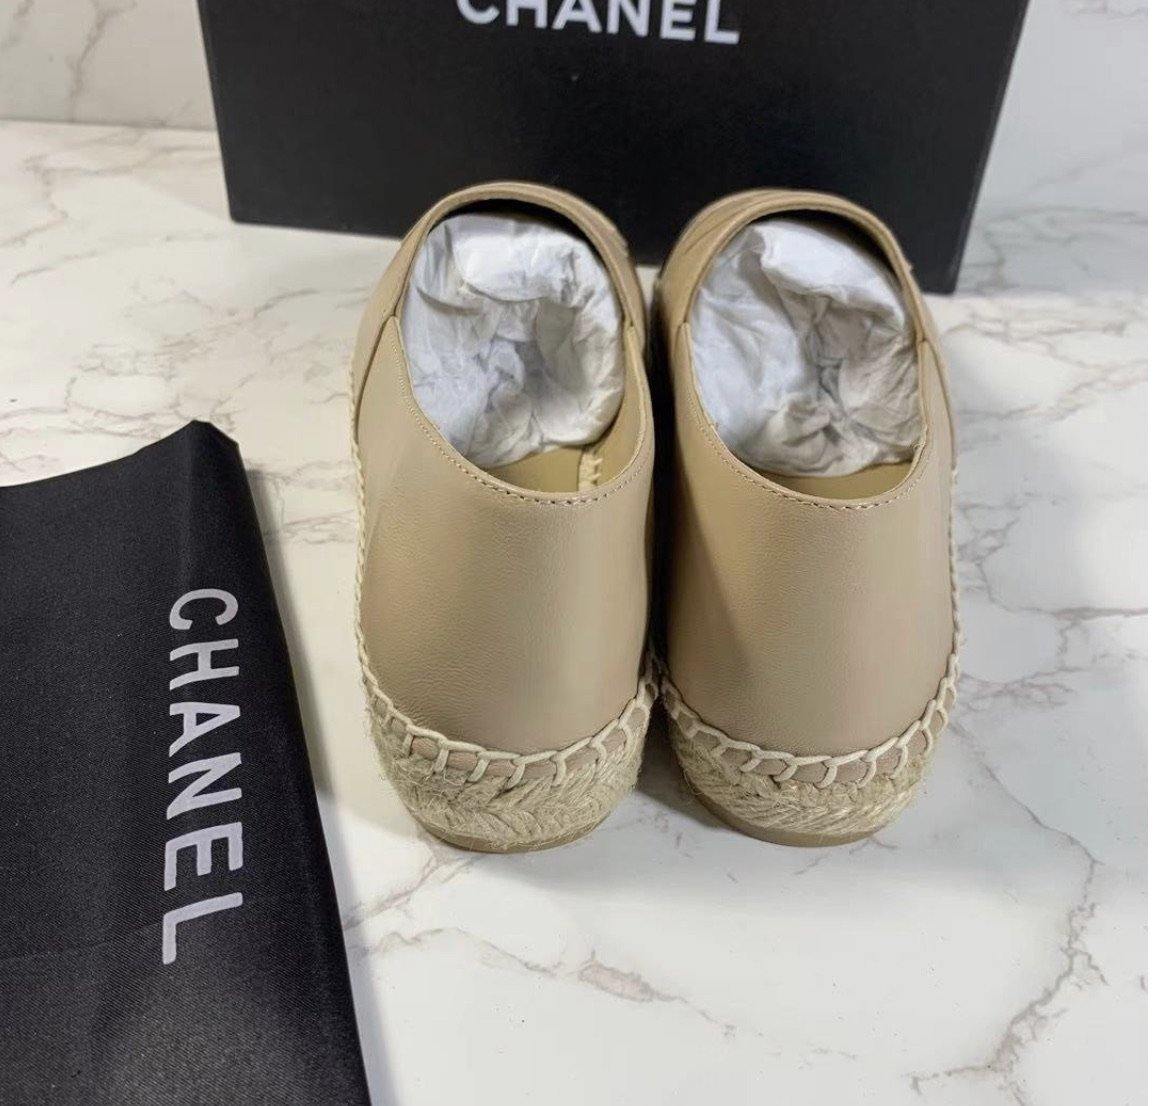 1) Chanel Espadrilles LUXURY KLOZETT